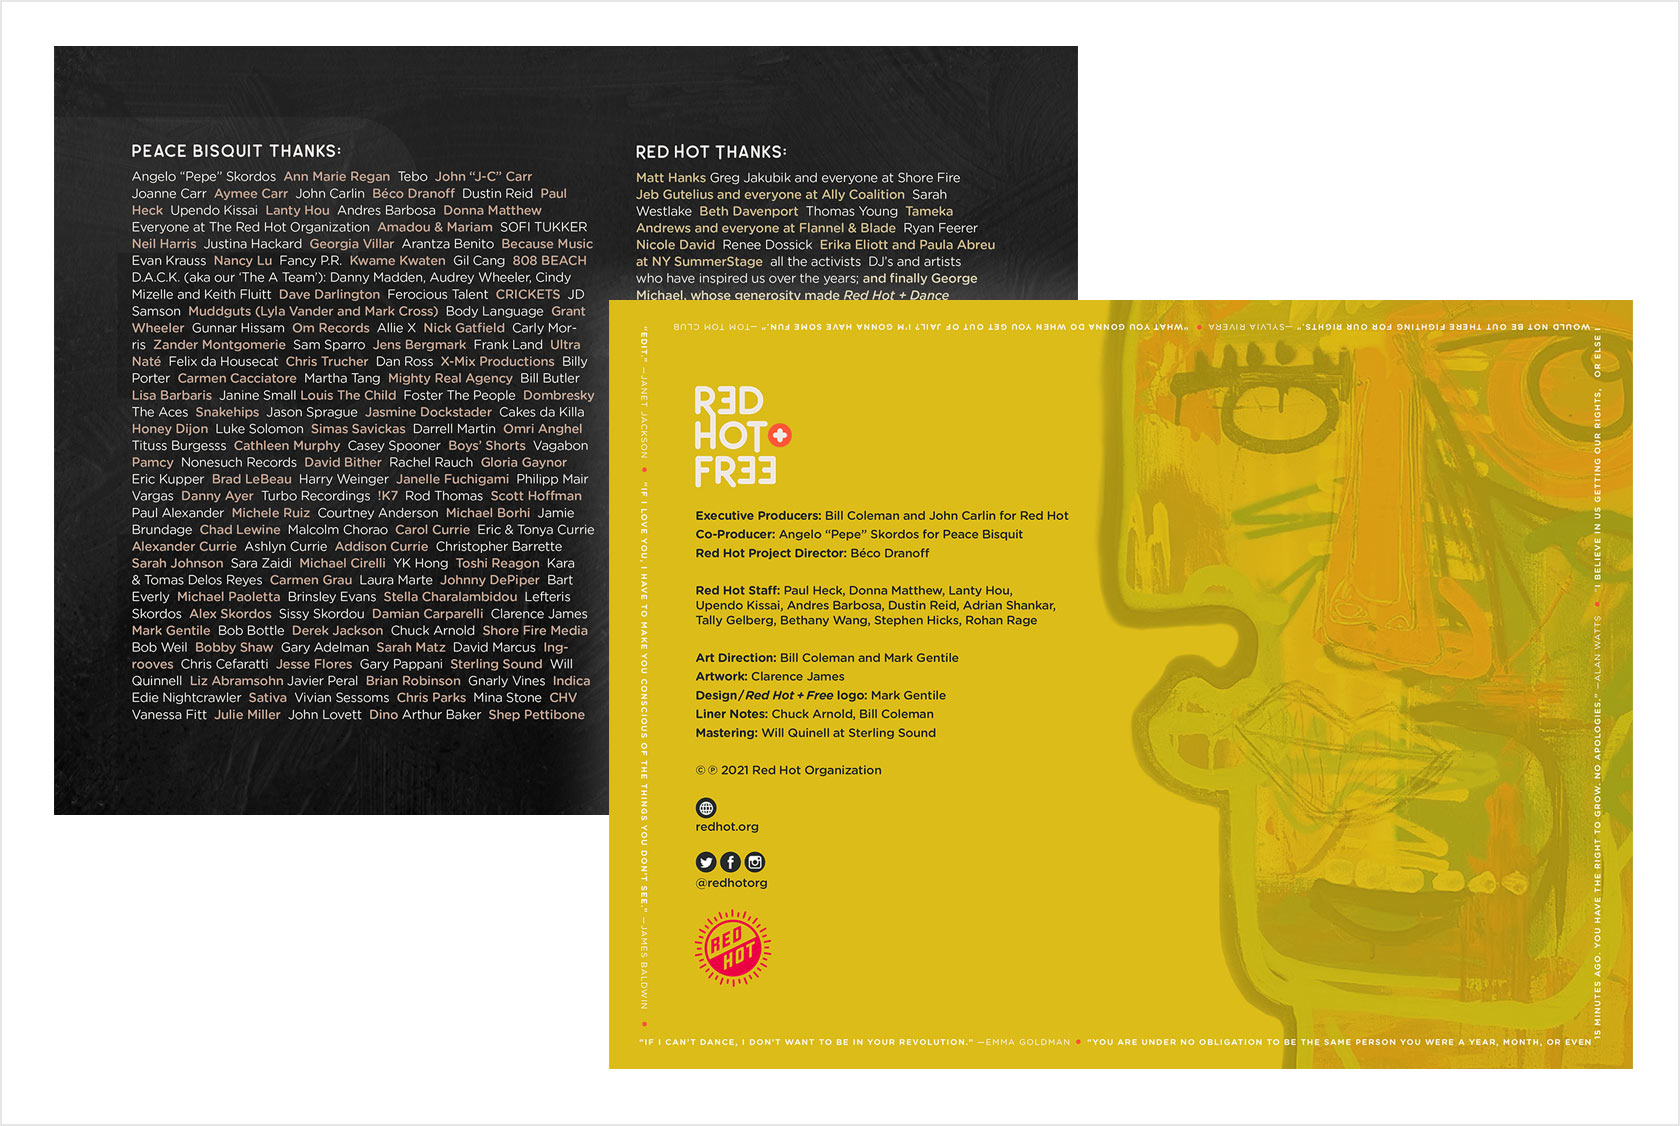 RED HOT + FREE | Music Packaging Design | Digital Booklet Design from Tastebuds 5